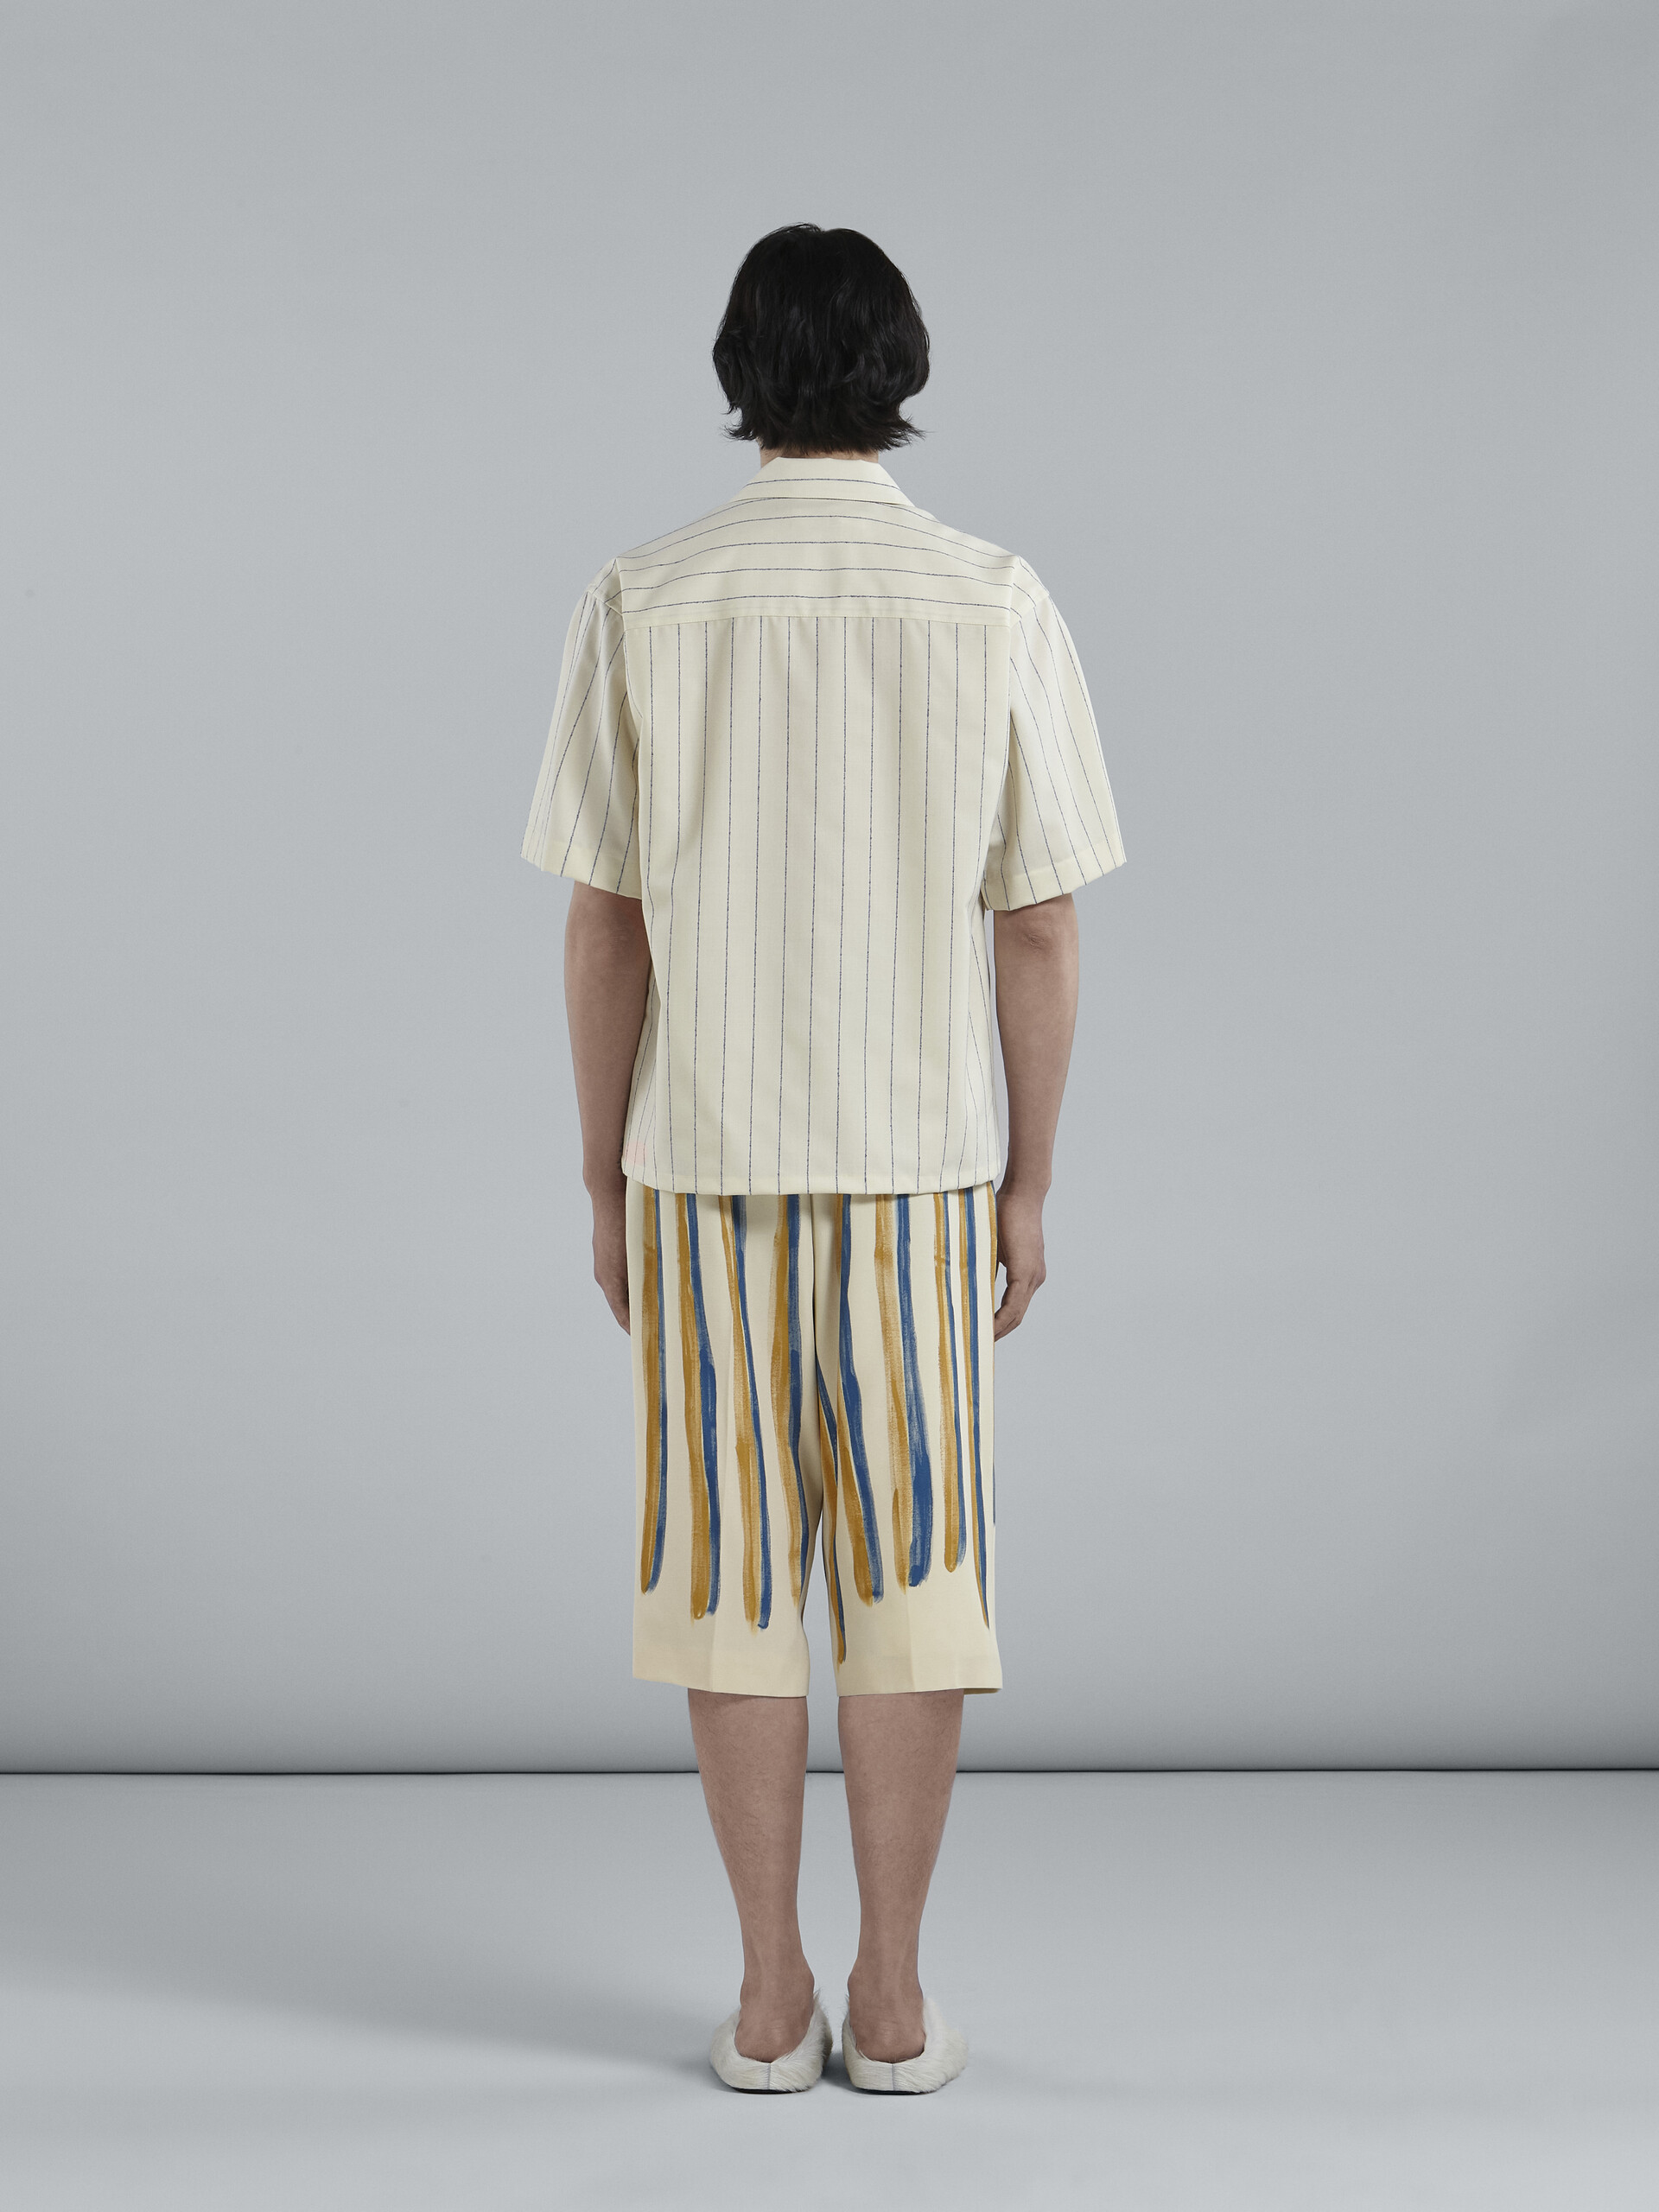 Pantalones cortos grain de poudre Watercolour Stripe - Pantalones - Image 3